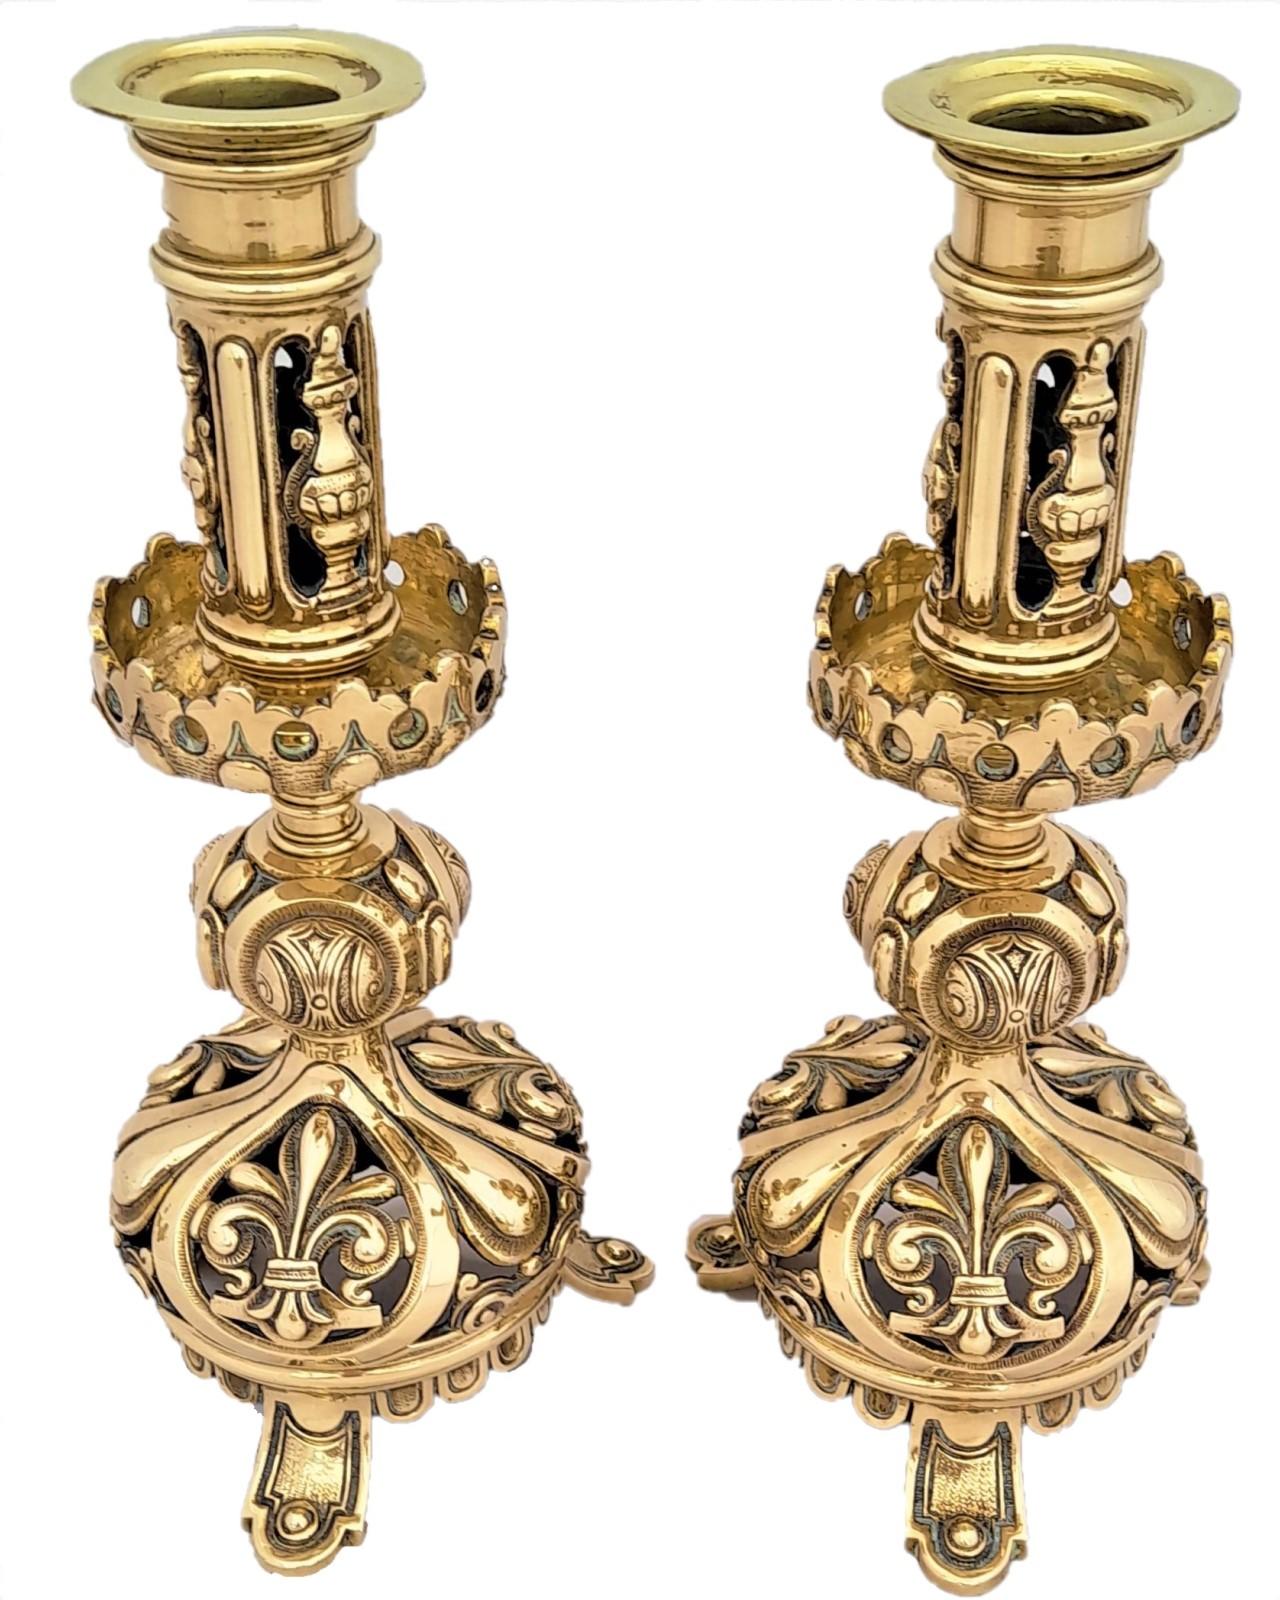 Pair of antique French brass Gothic Revival ornate candlesticks circa 1860 - tripod pad feet Fleur de Lys Napoleon III 23 cm high 1.8 kg